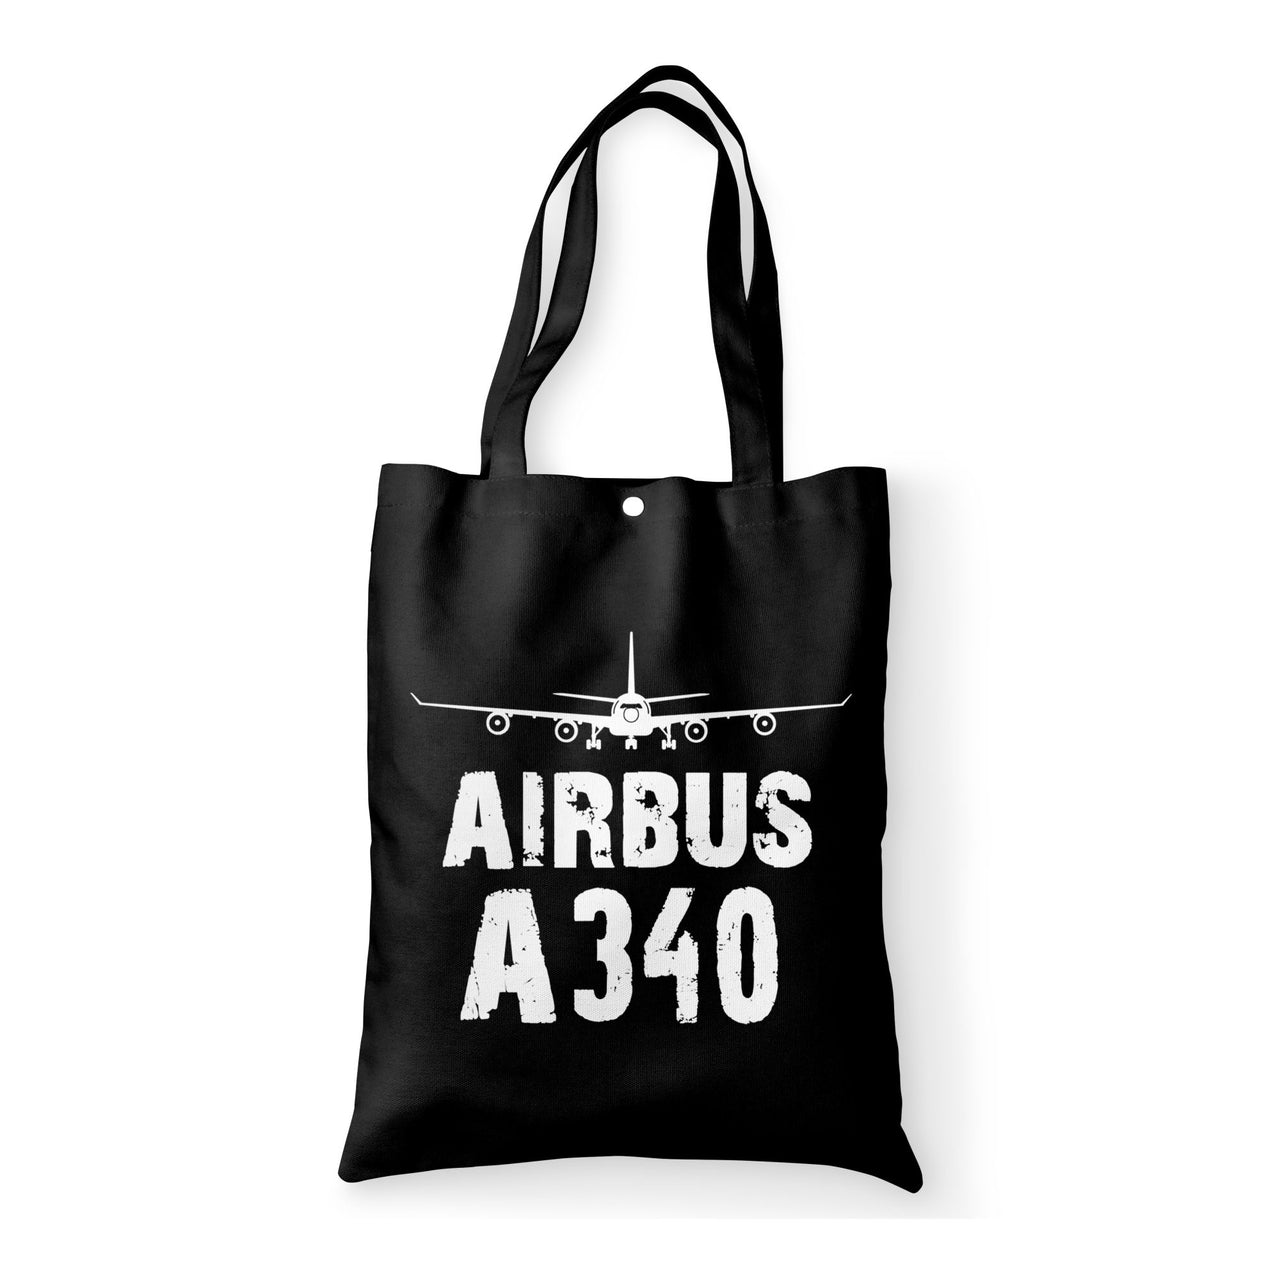 Airbus A340 & Plane Designed Tote Bags